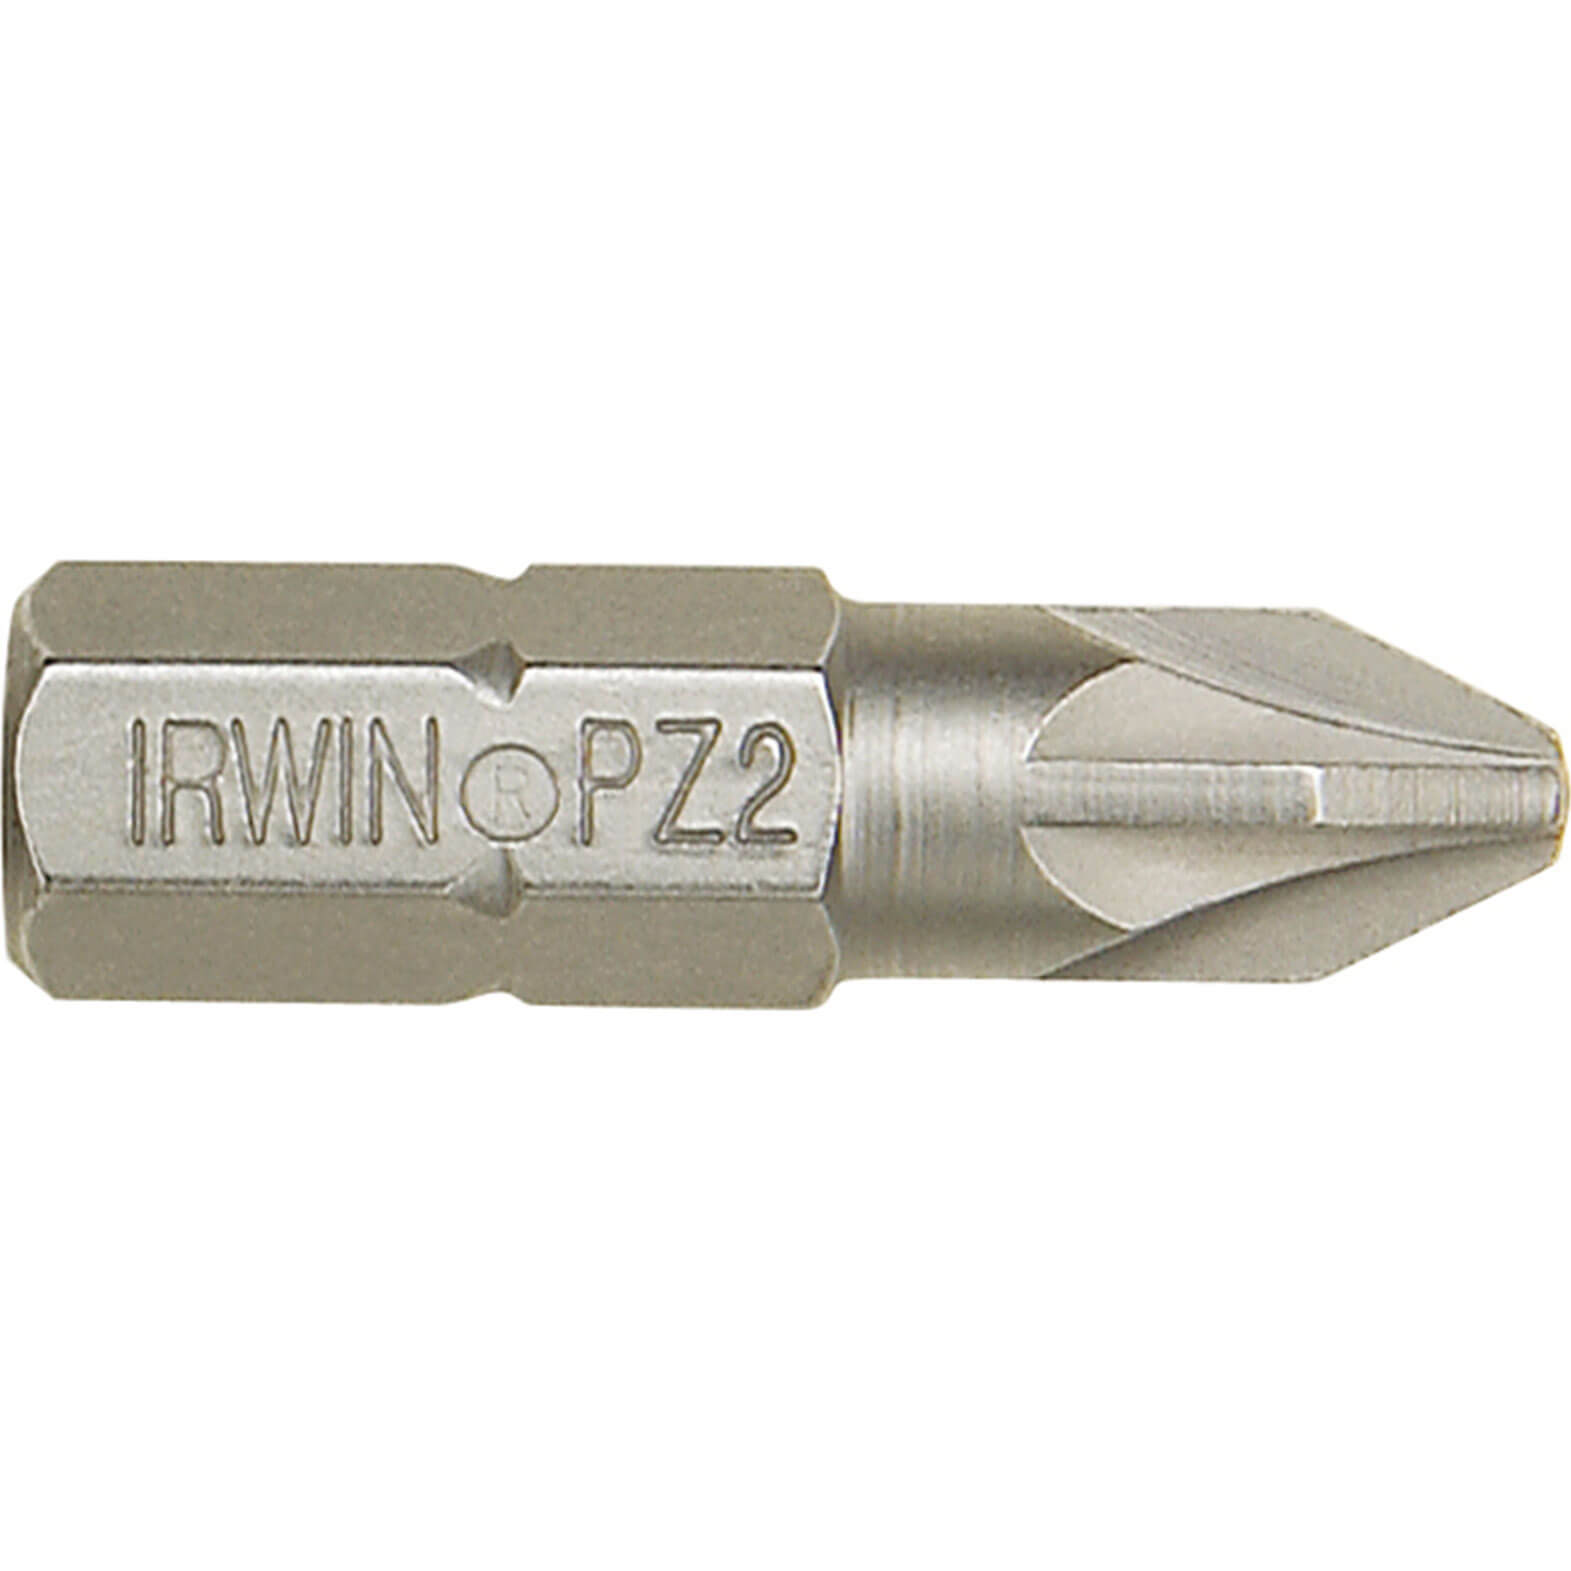 Photo of Irwin Pozi Screwdriver Bit Pz1 50mm Pack Of 2